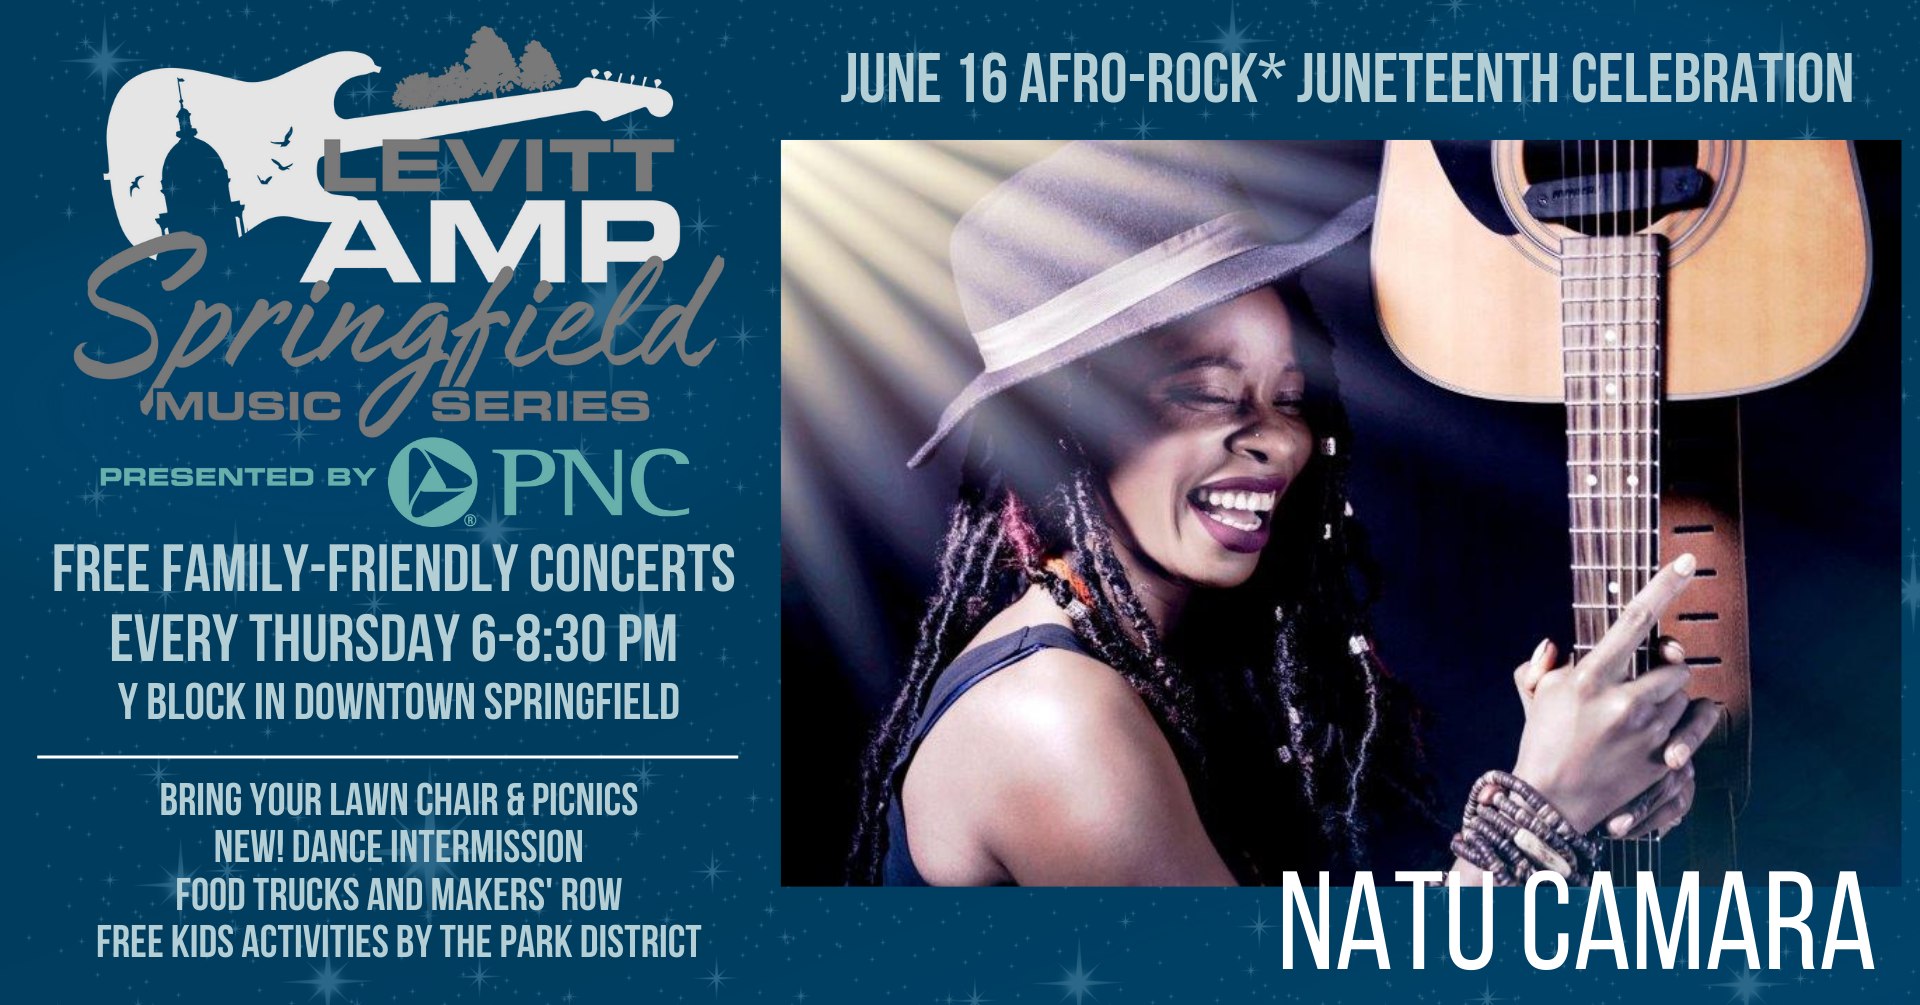 June 16 Afro-Rock Juneteenth Celebration Natu Camara